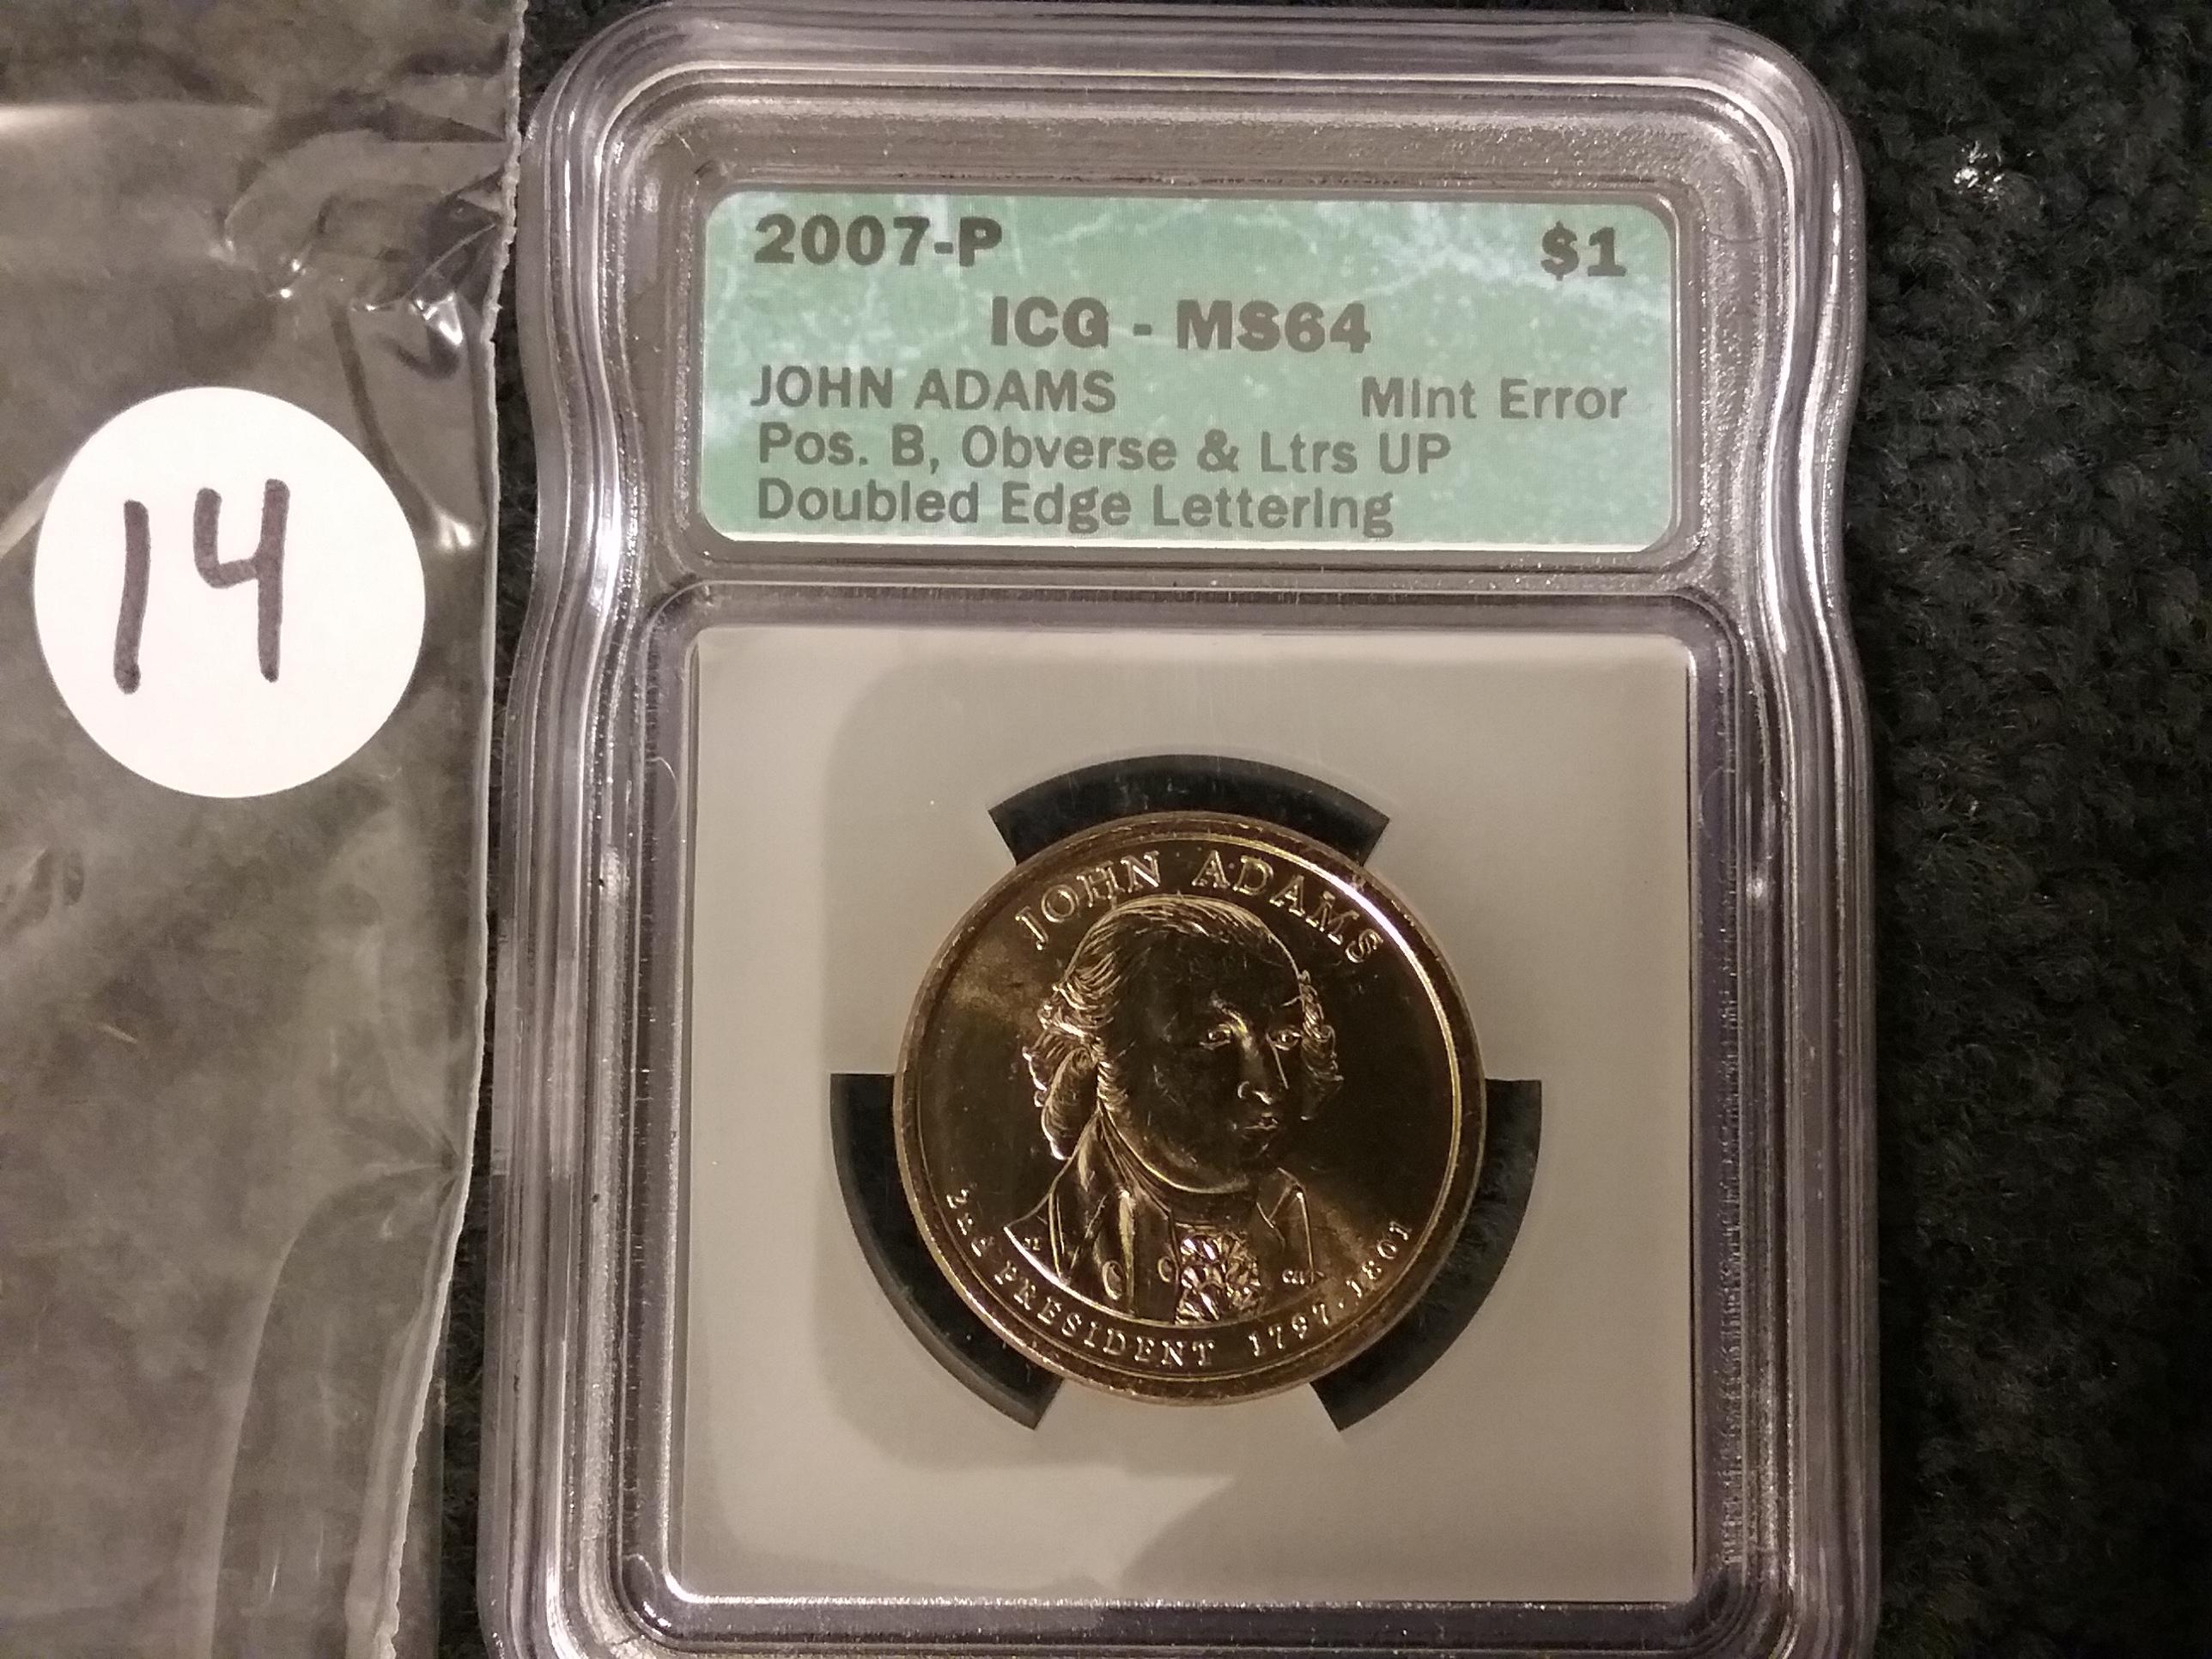 2007-P John Adams Presidential Dollar in MS-64 ERROR COIN